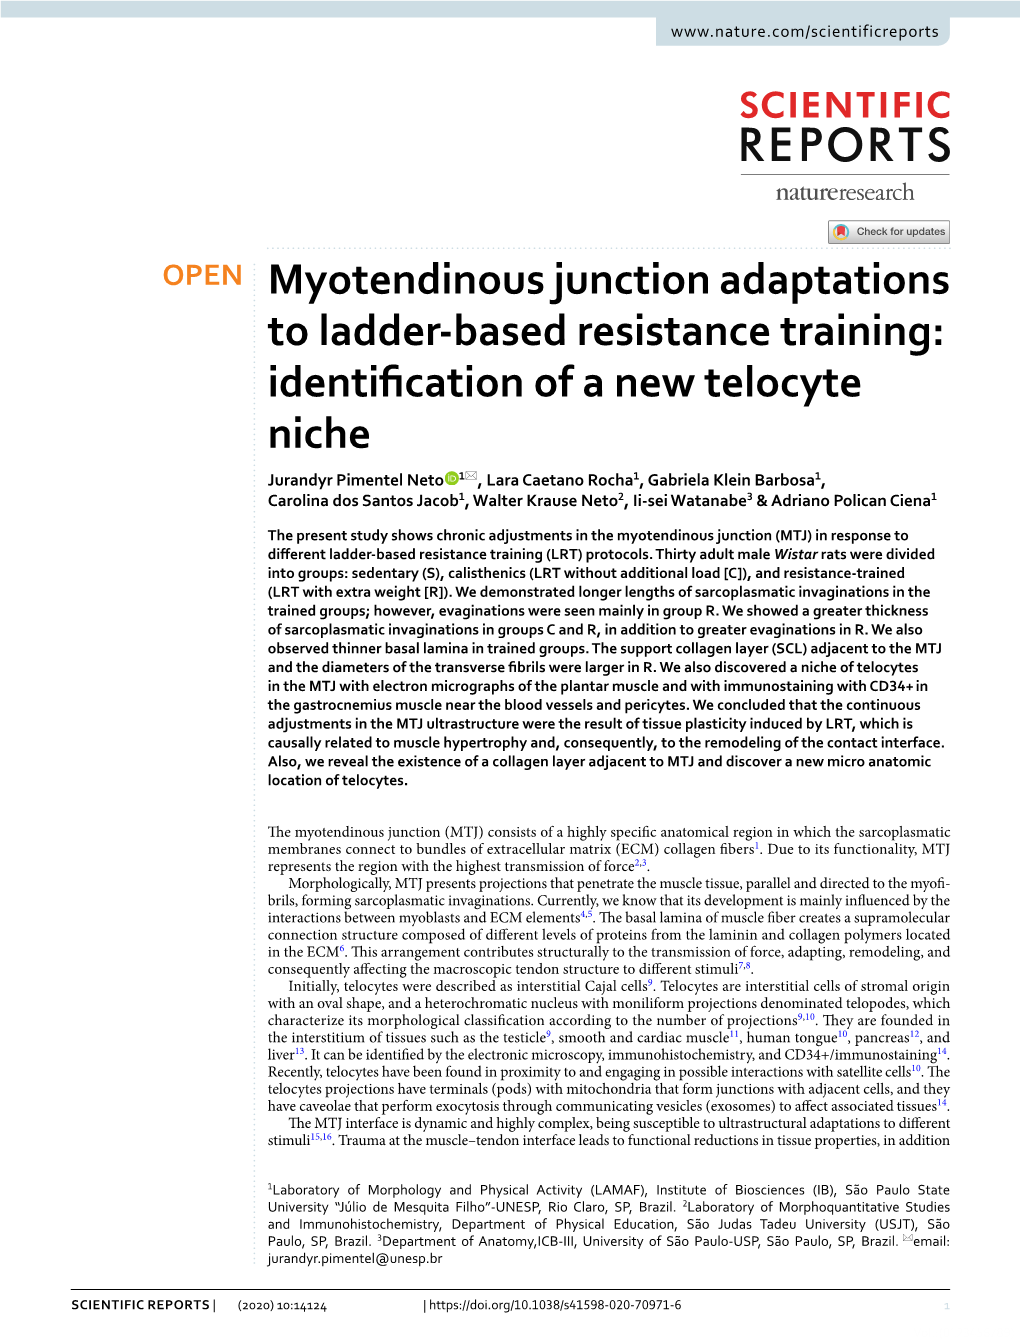 Myotendinous Junction Adaptations to Ladder-Based Resistance